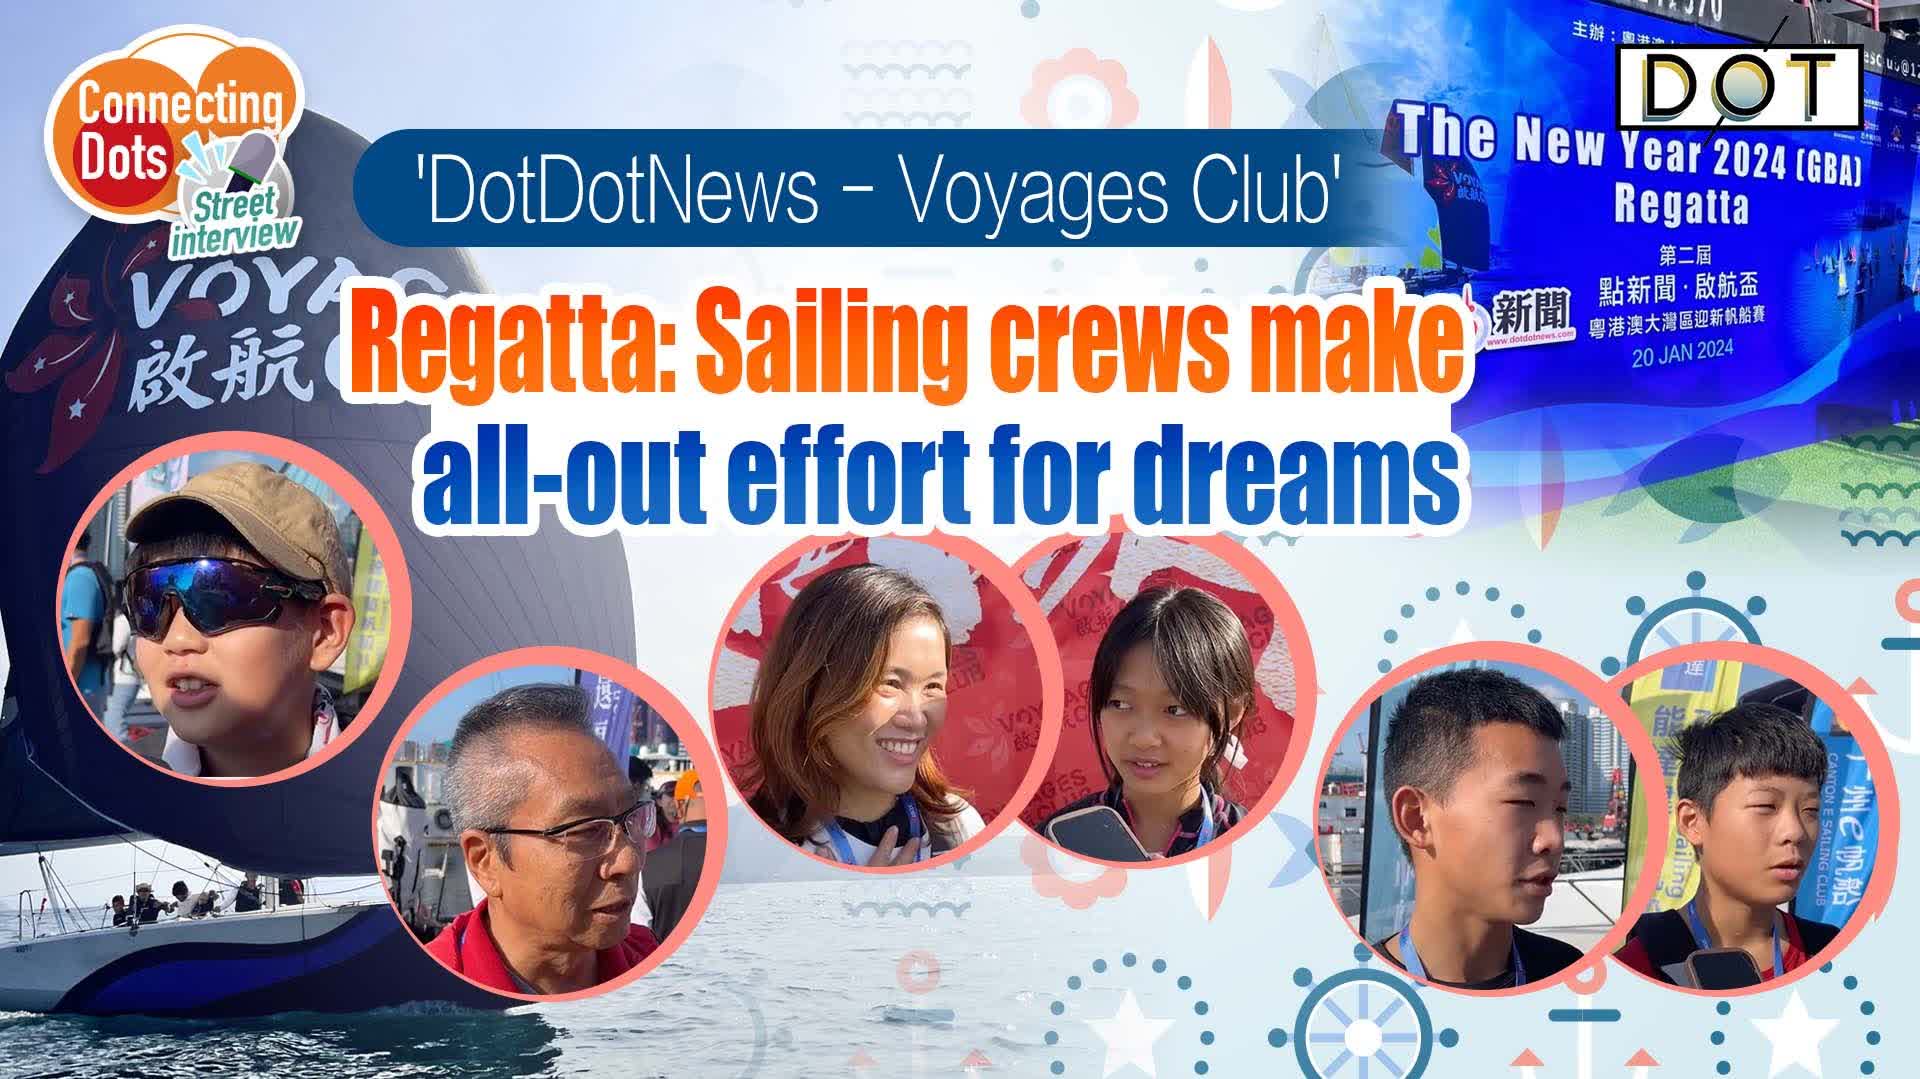 Connecting Dots | 'DotDotNews - Voyages Club' Regatta: Sailing crews make all-out effort for dreams